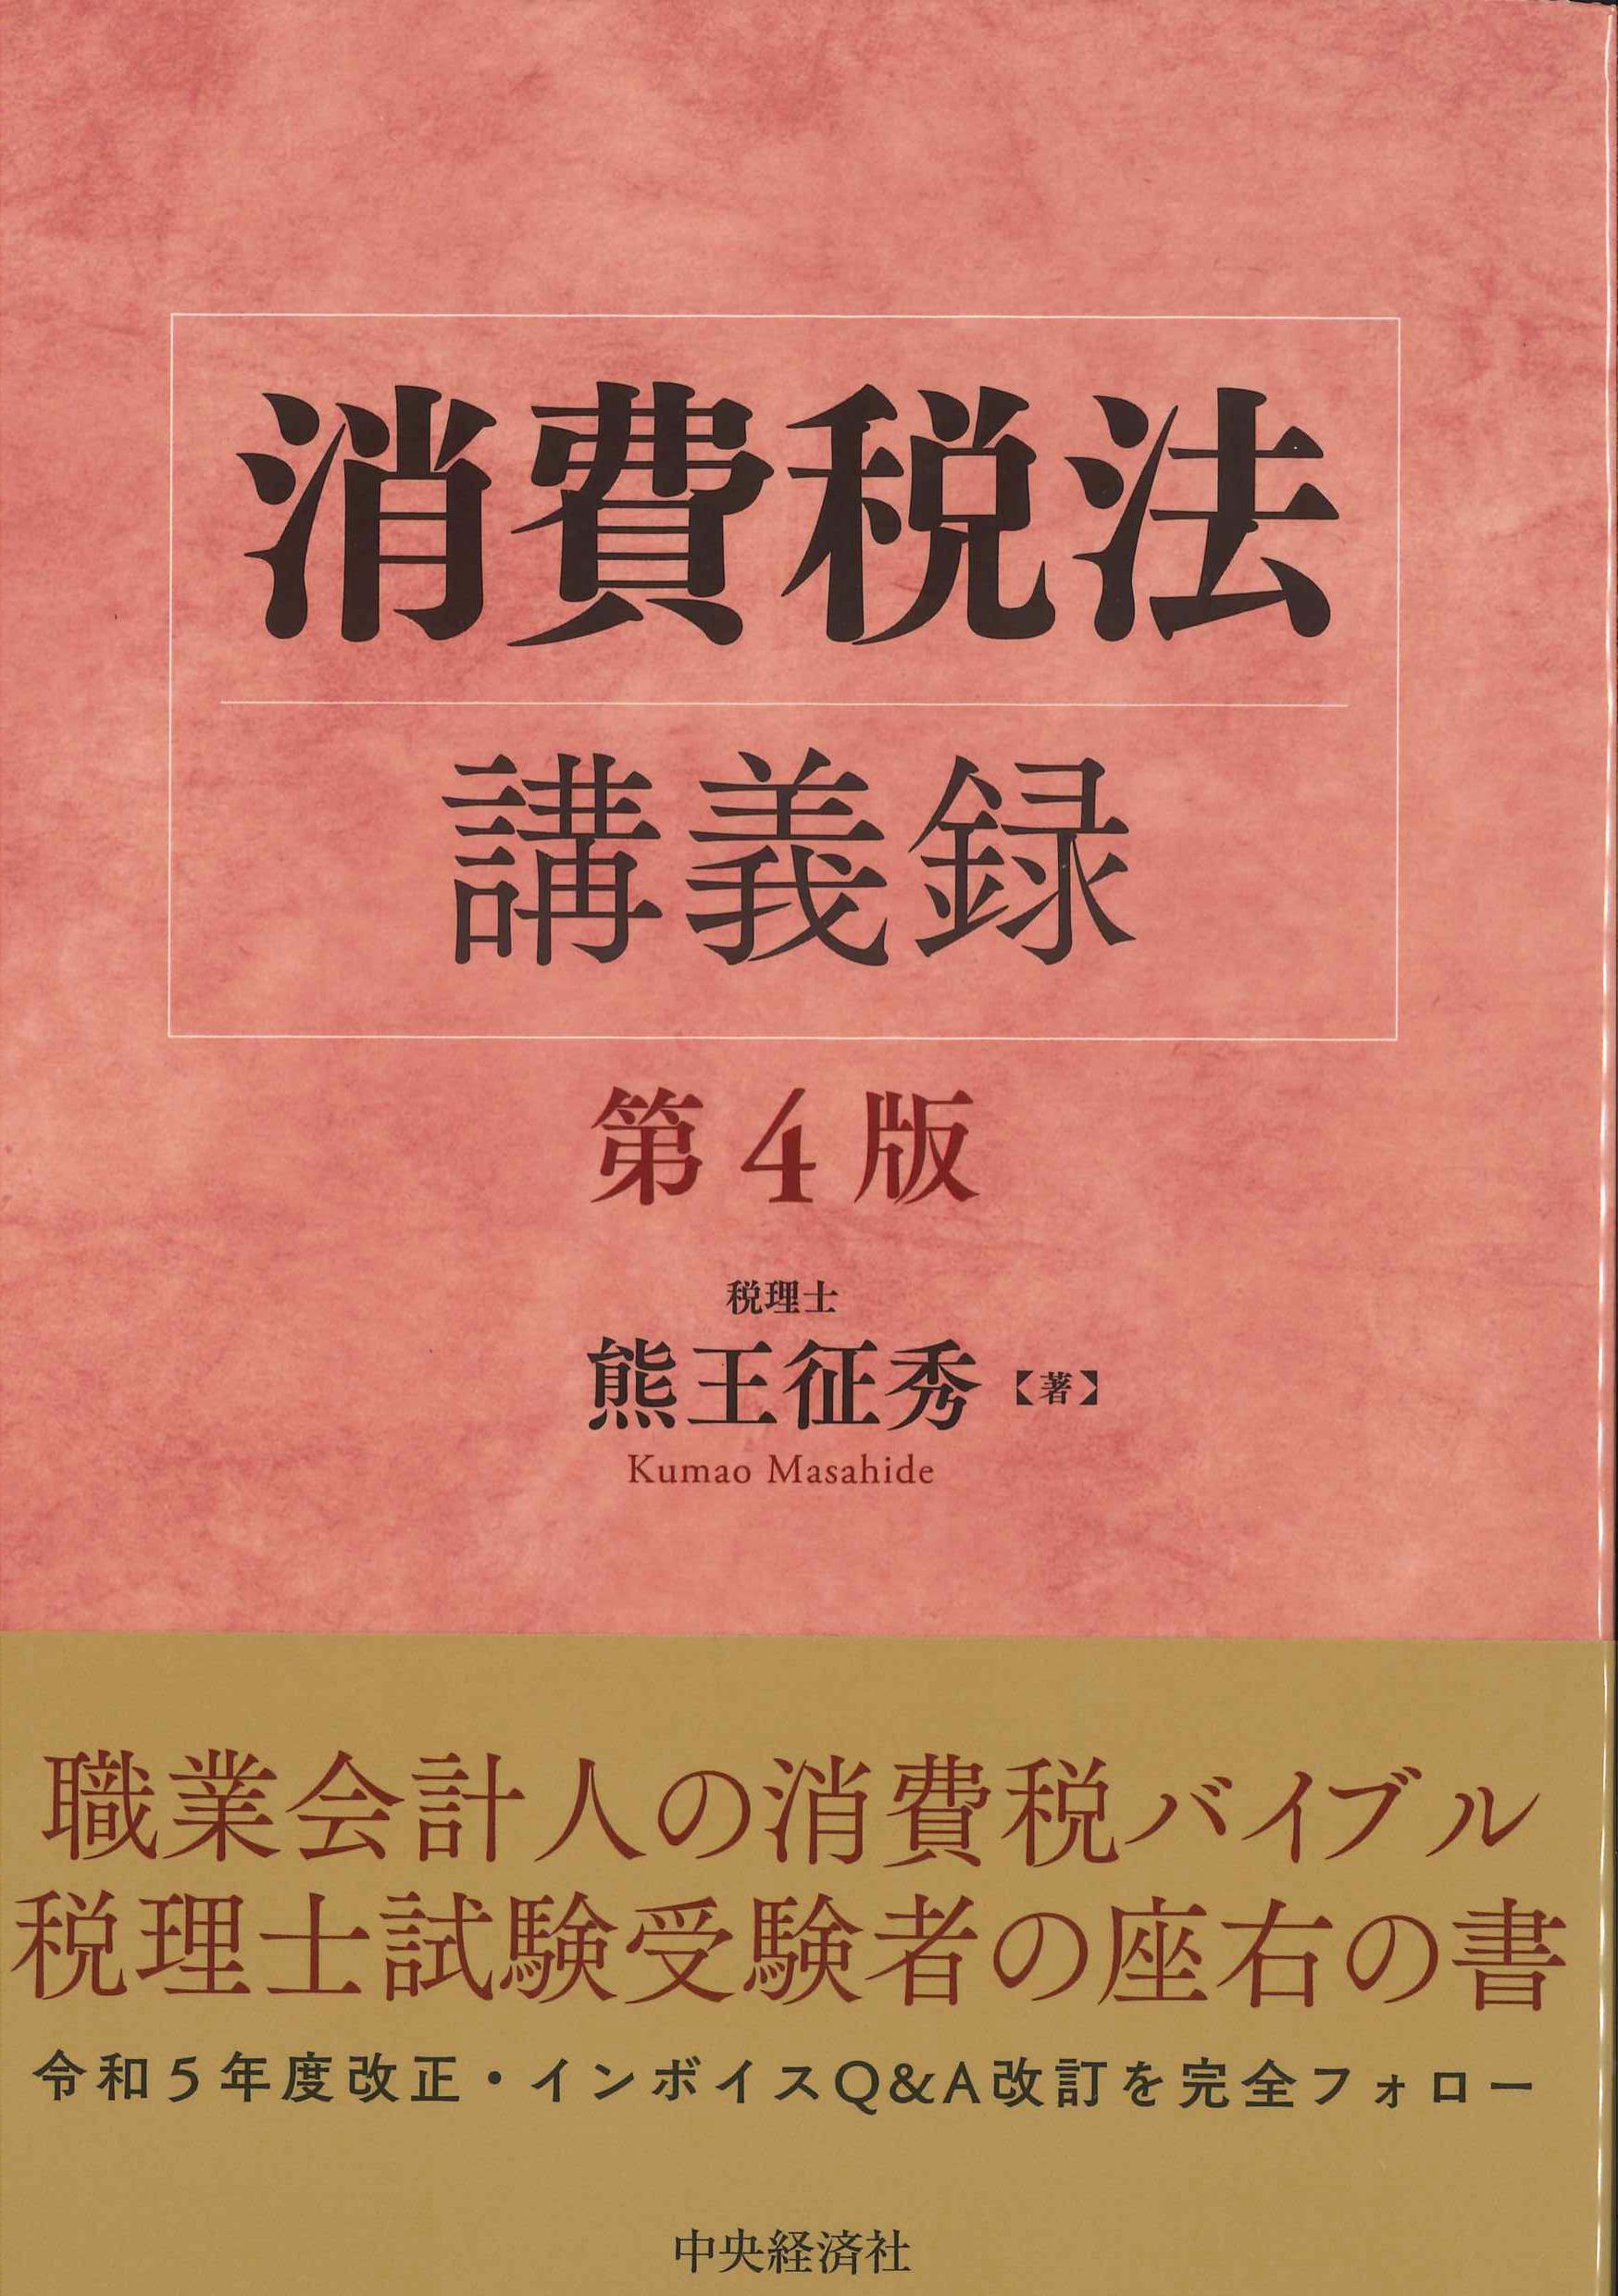 消費税法講義録 第4版熊王征秀 - ビジネス/経済